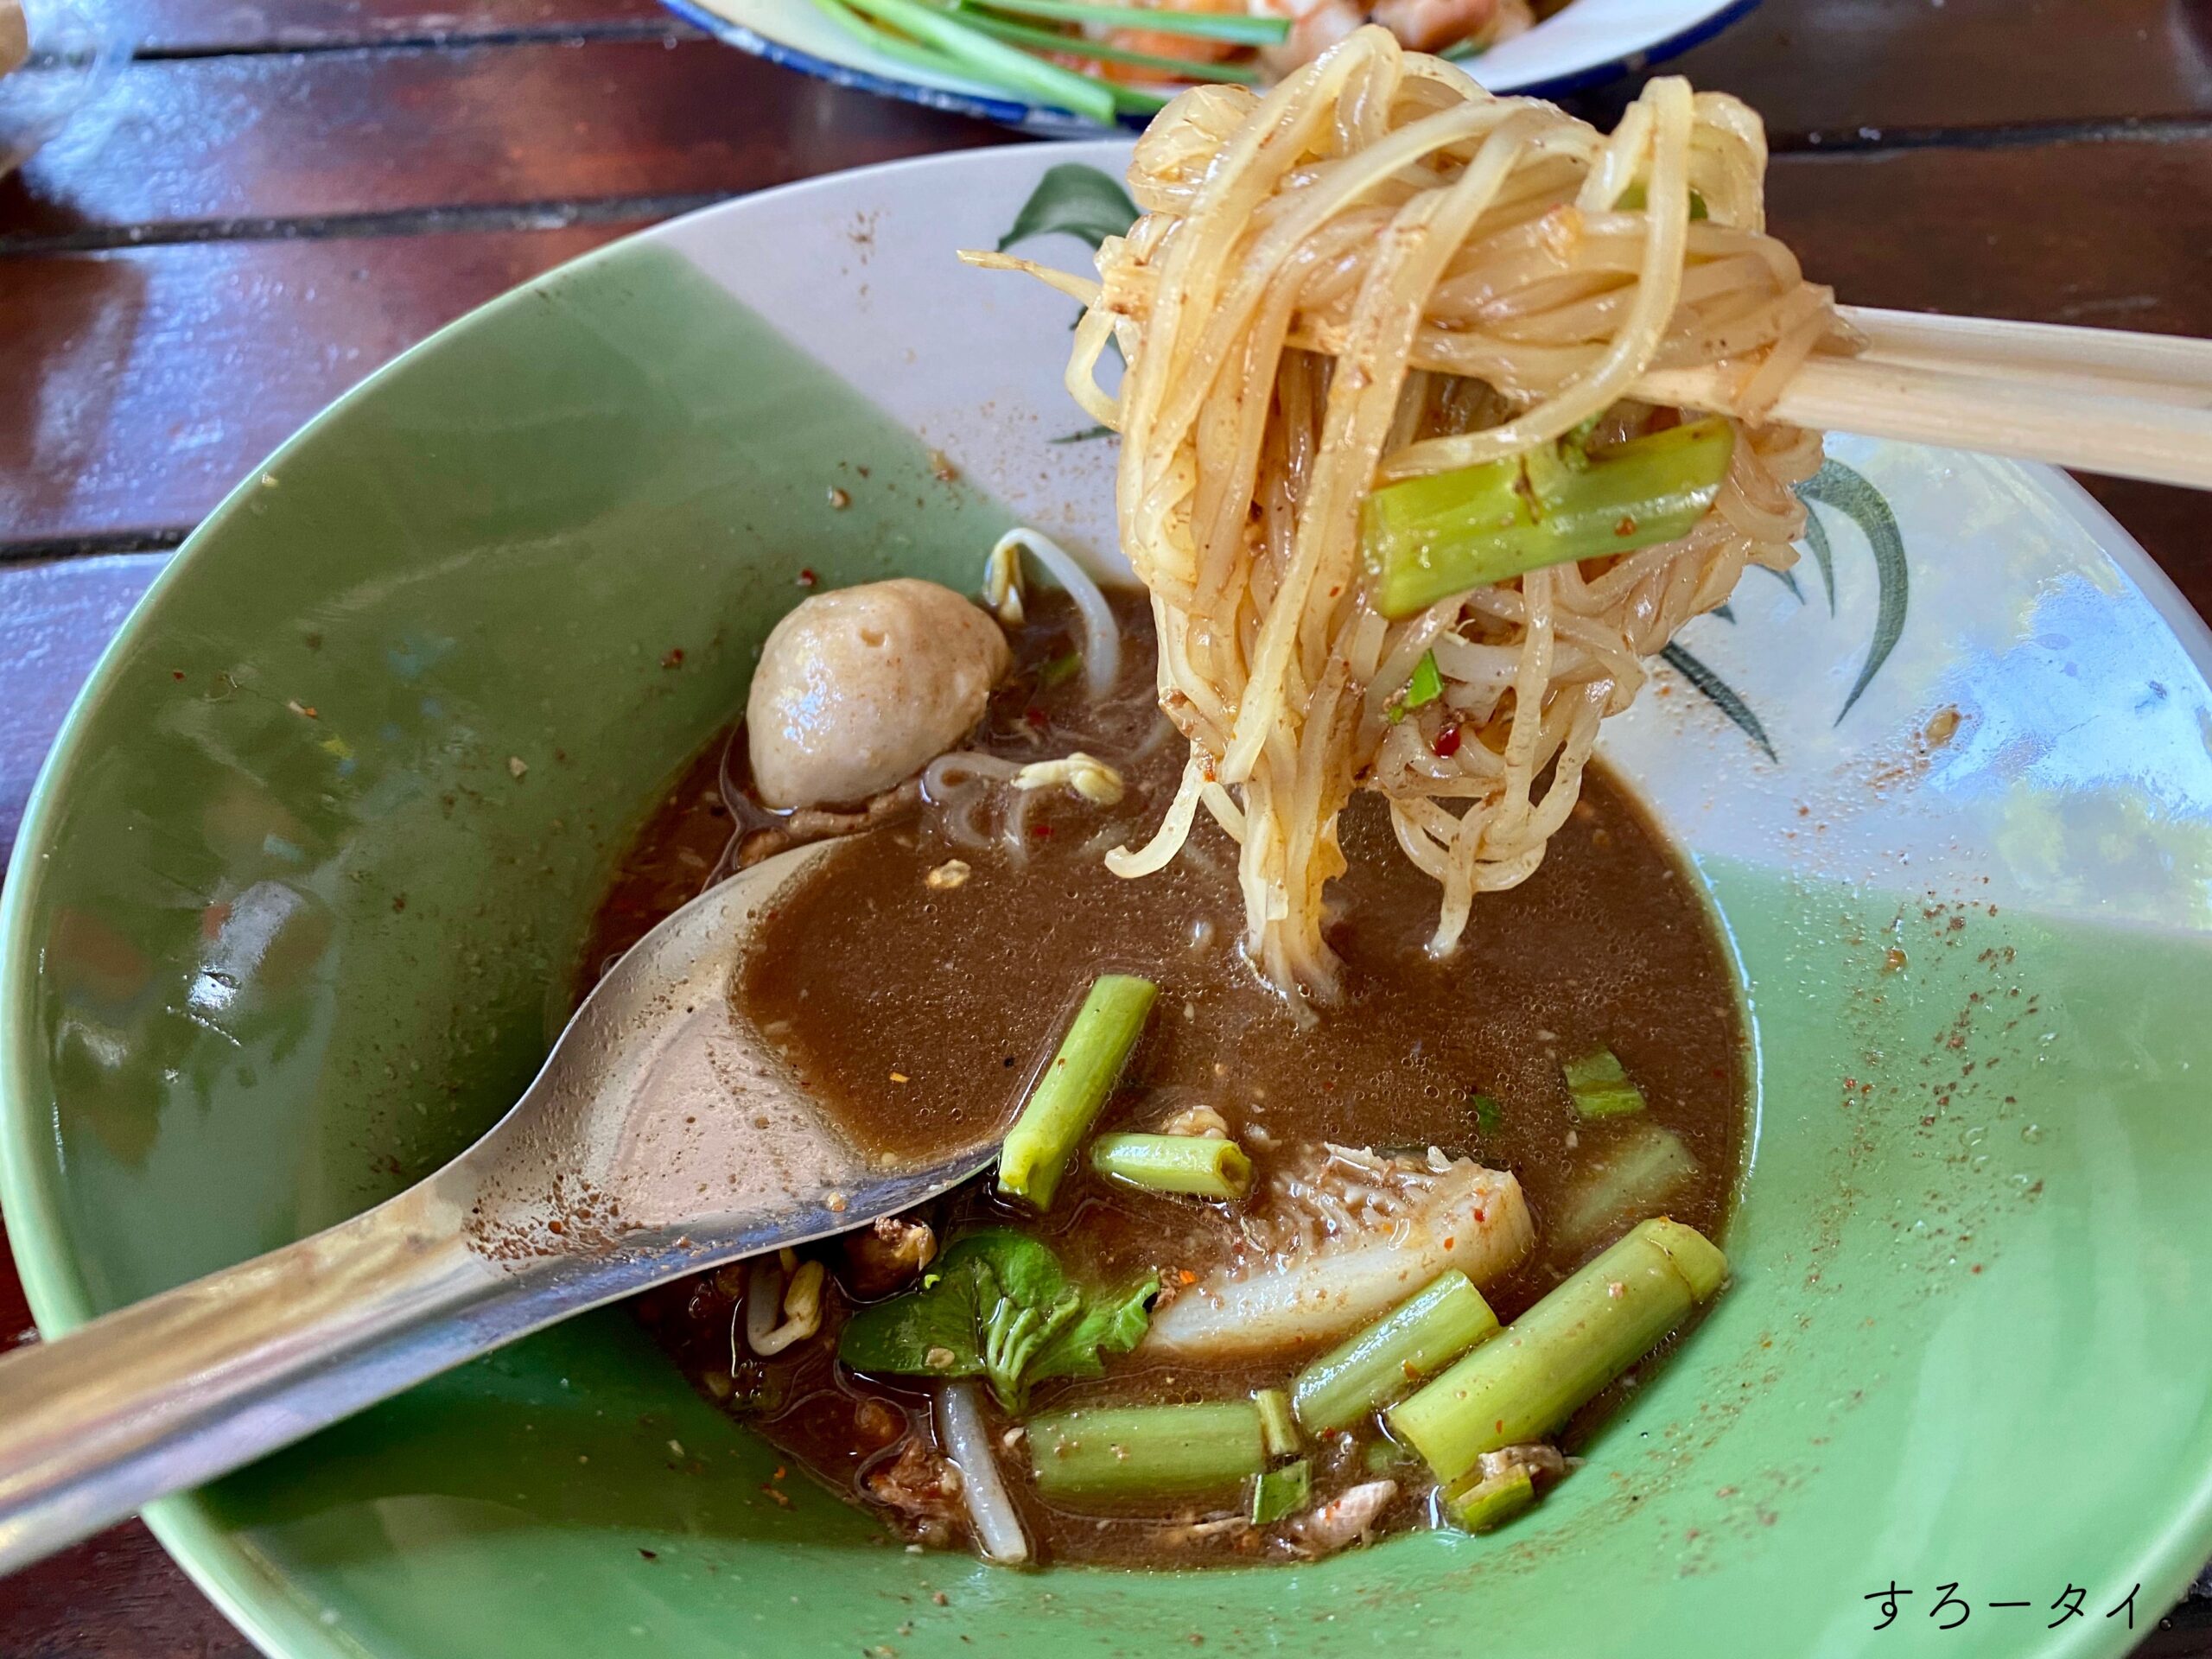 Klong Srabua Boat Noodle（ก๋วยเตี๋ยวเรือคลองสระบัว）